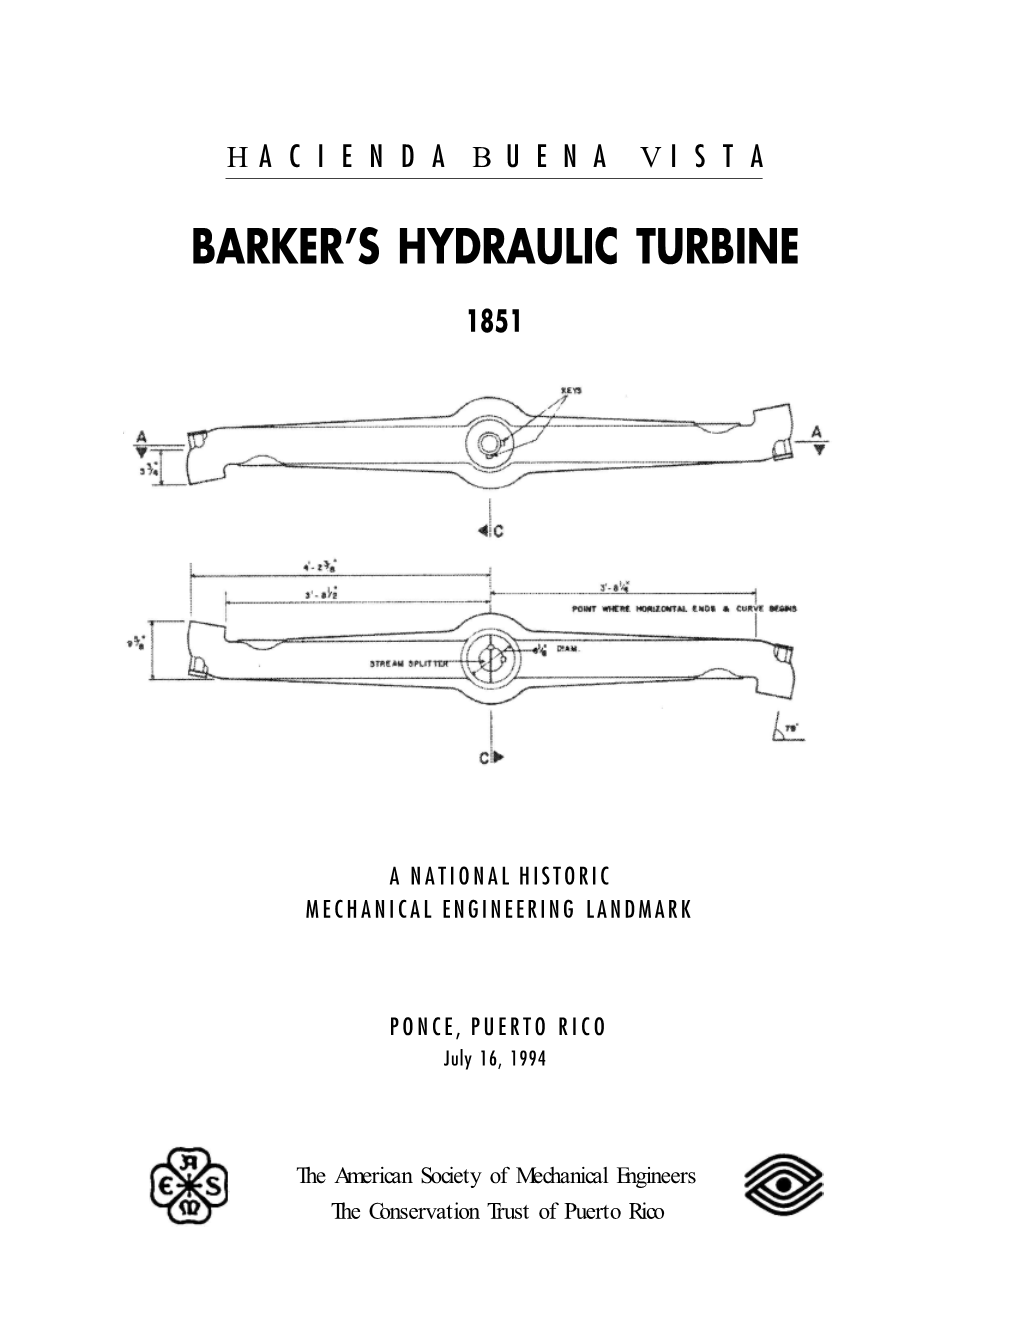 Barker's Hydraulic Turbine